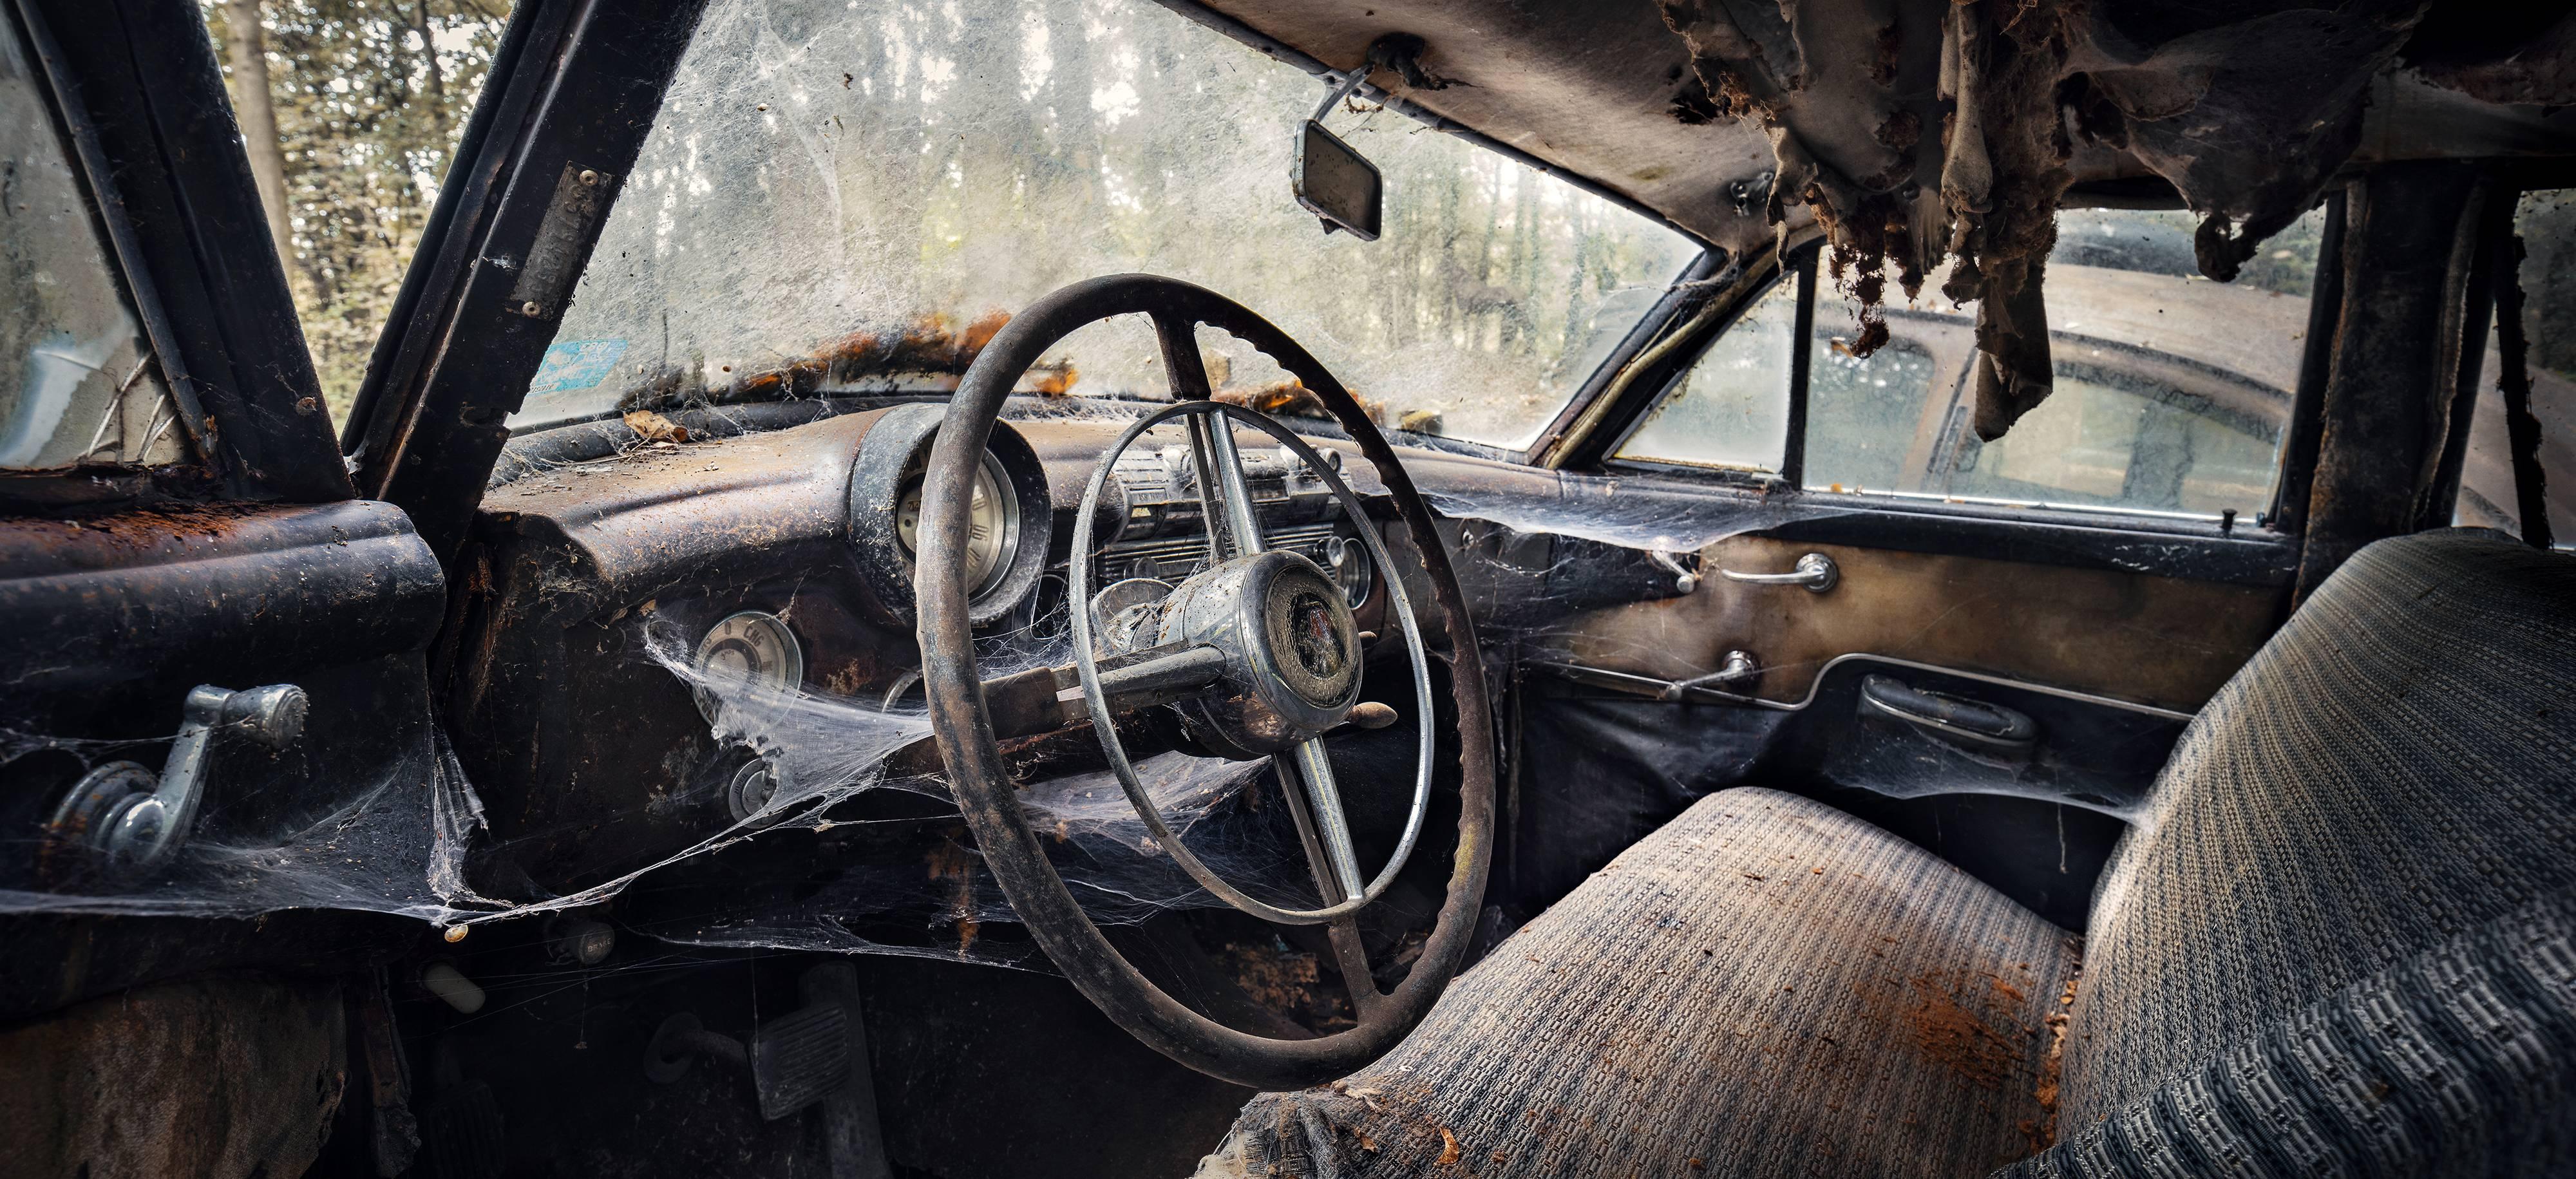 Jan Stel Figurative Photograph - Abandoned Car 01 - 2016